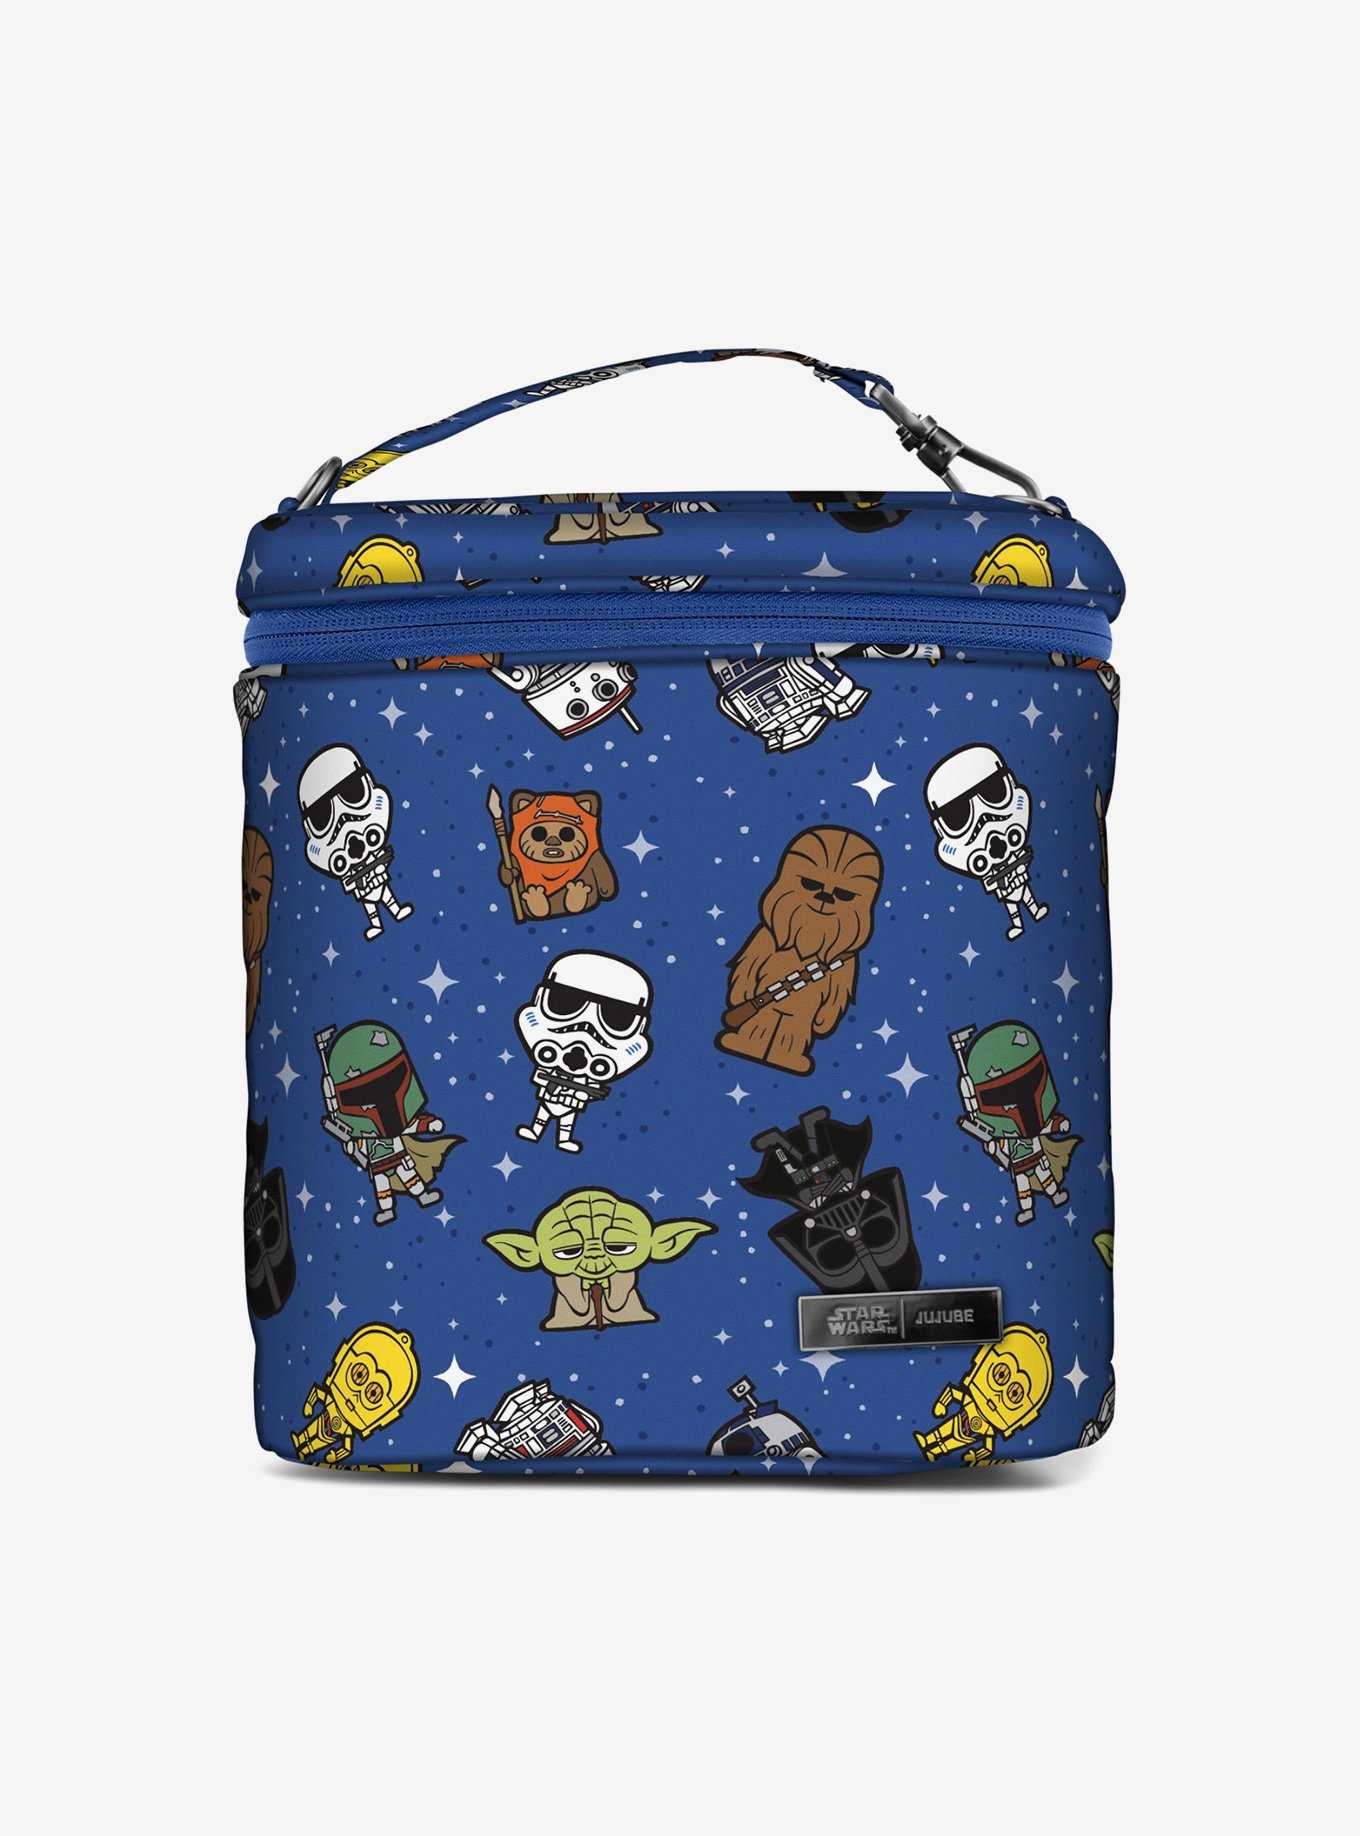 Miniso Disney Frozen II Insulated Lunch Bag (Blue)